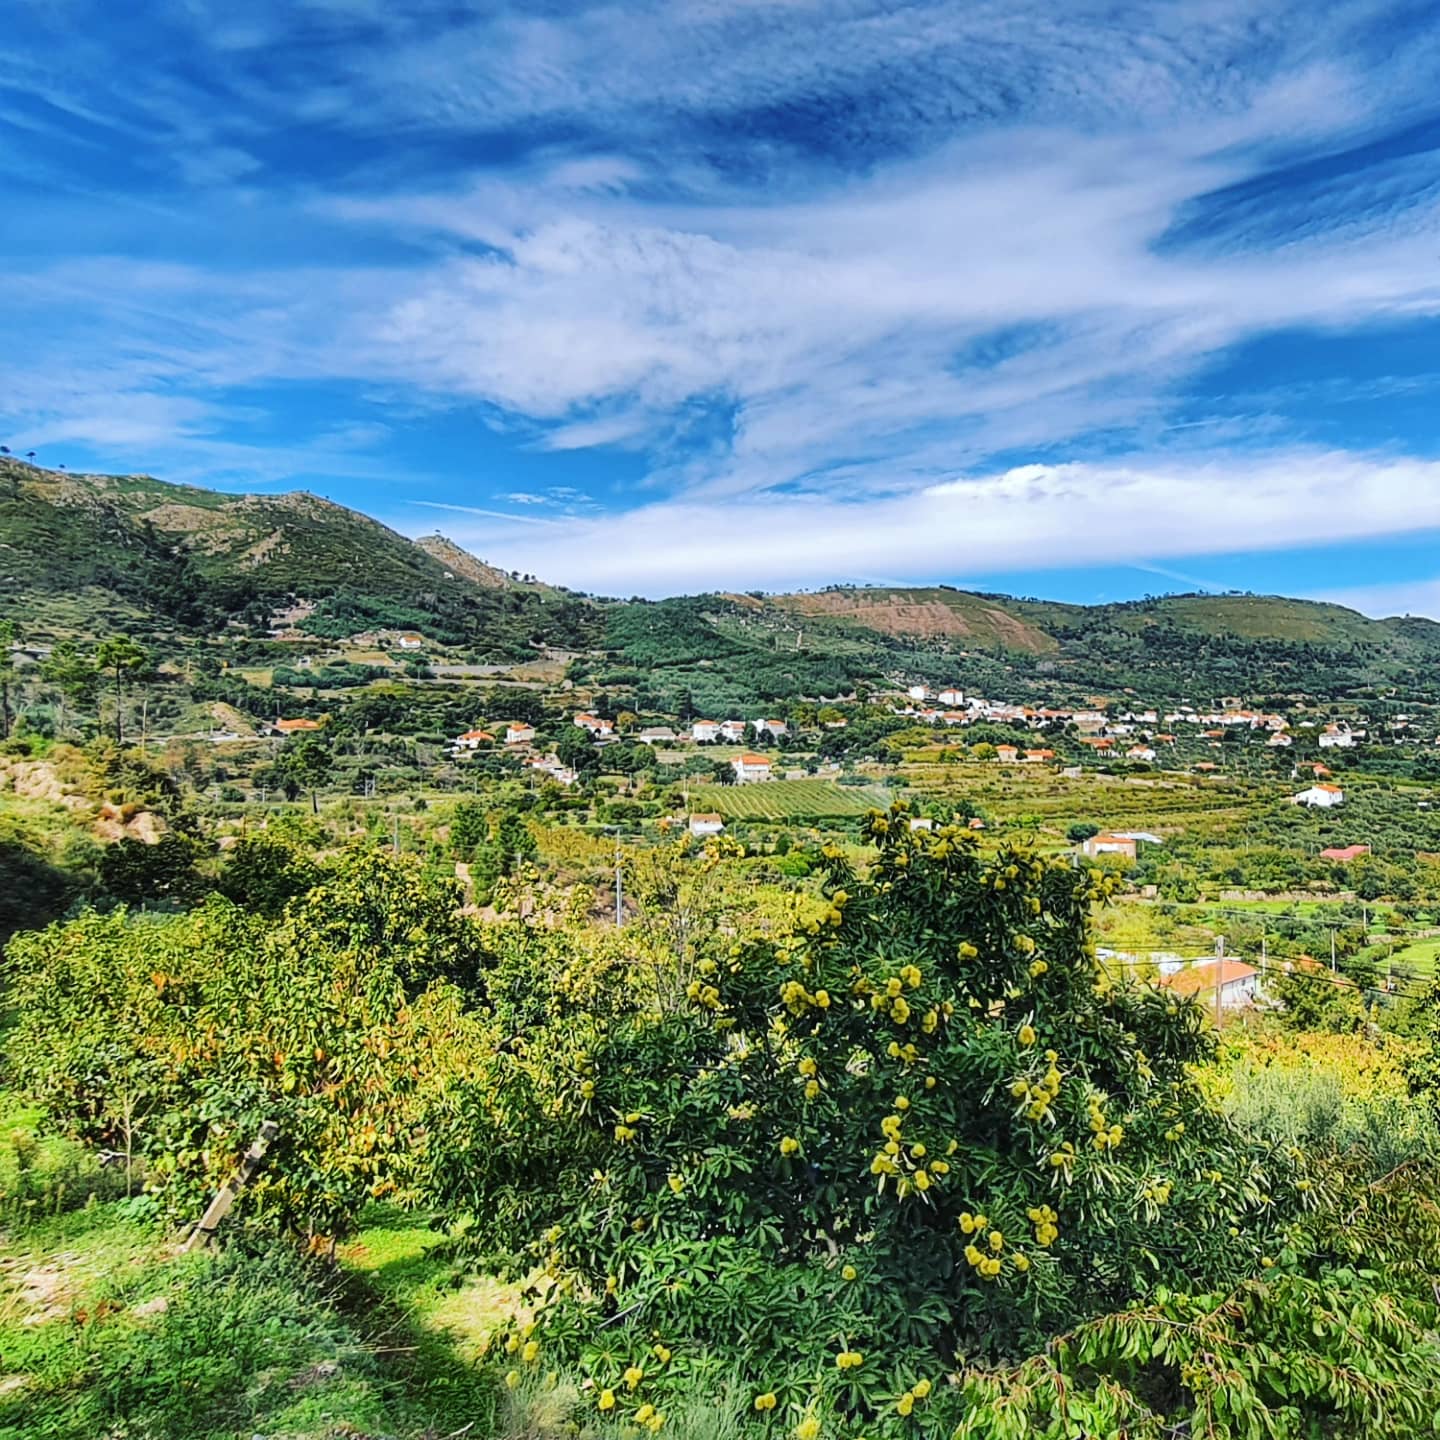 Views of the Castelo Branco region driving through Portugal